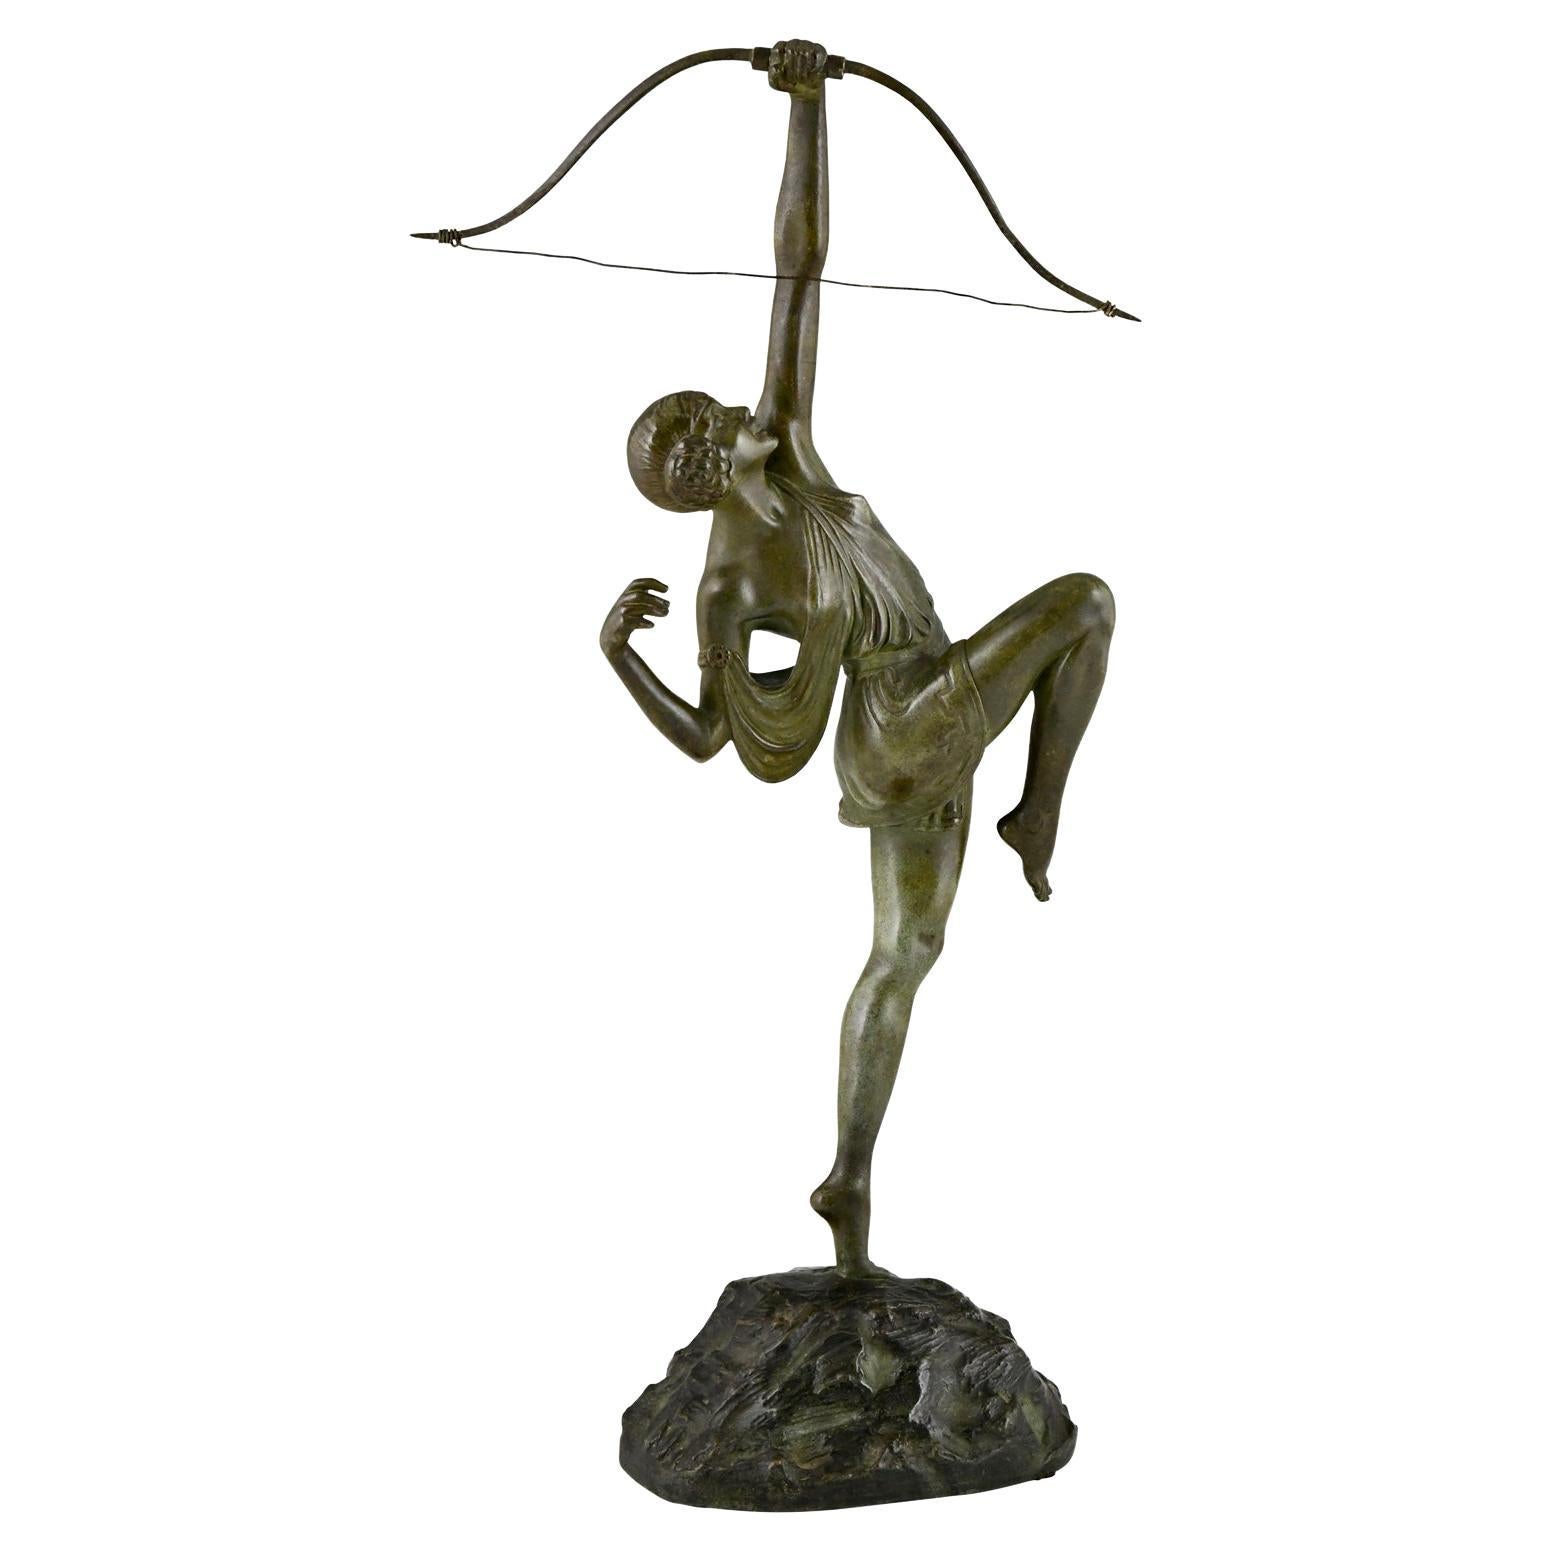 Art Deco Bronze Sculpture Diana Woman with Bow by Pierre Le Faguays 1925